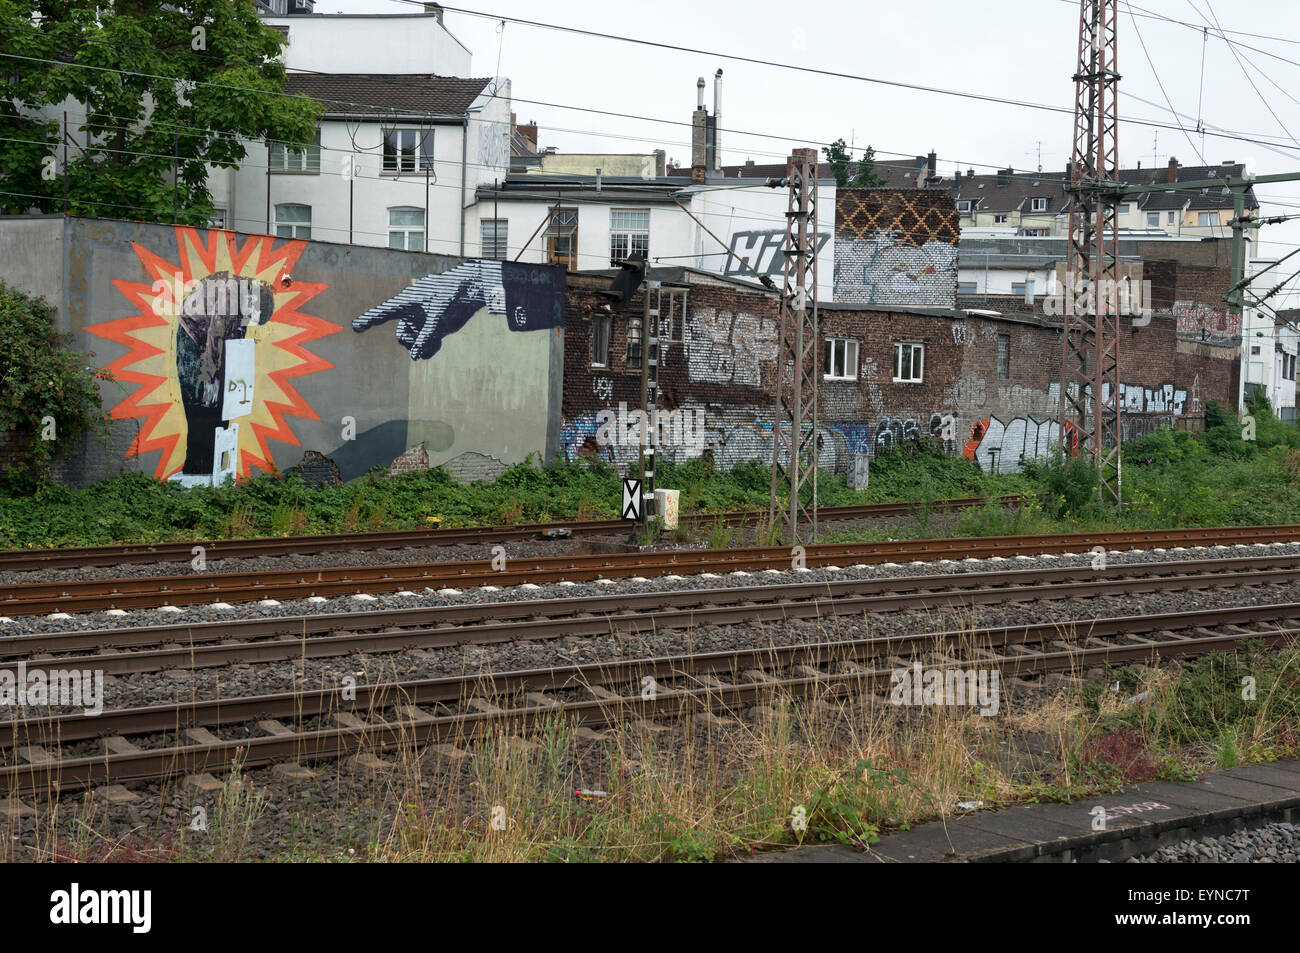 Railway graffiti, Wehrhahn, Dusseldorf, North Rhine-Westphalia, Germany. Stock Photo